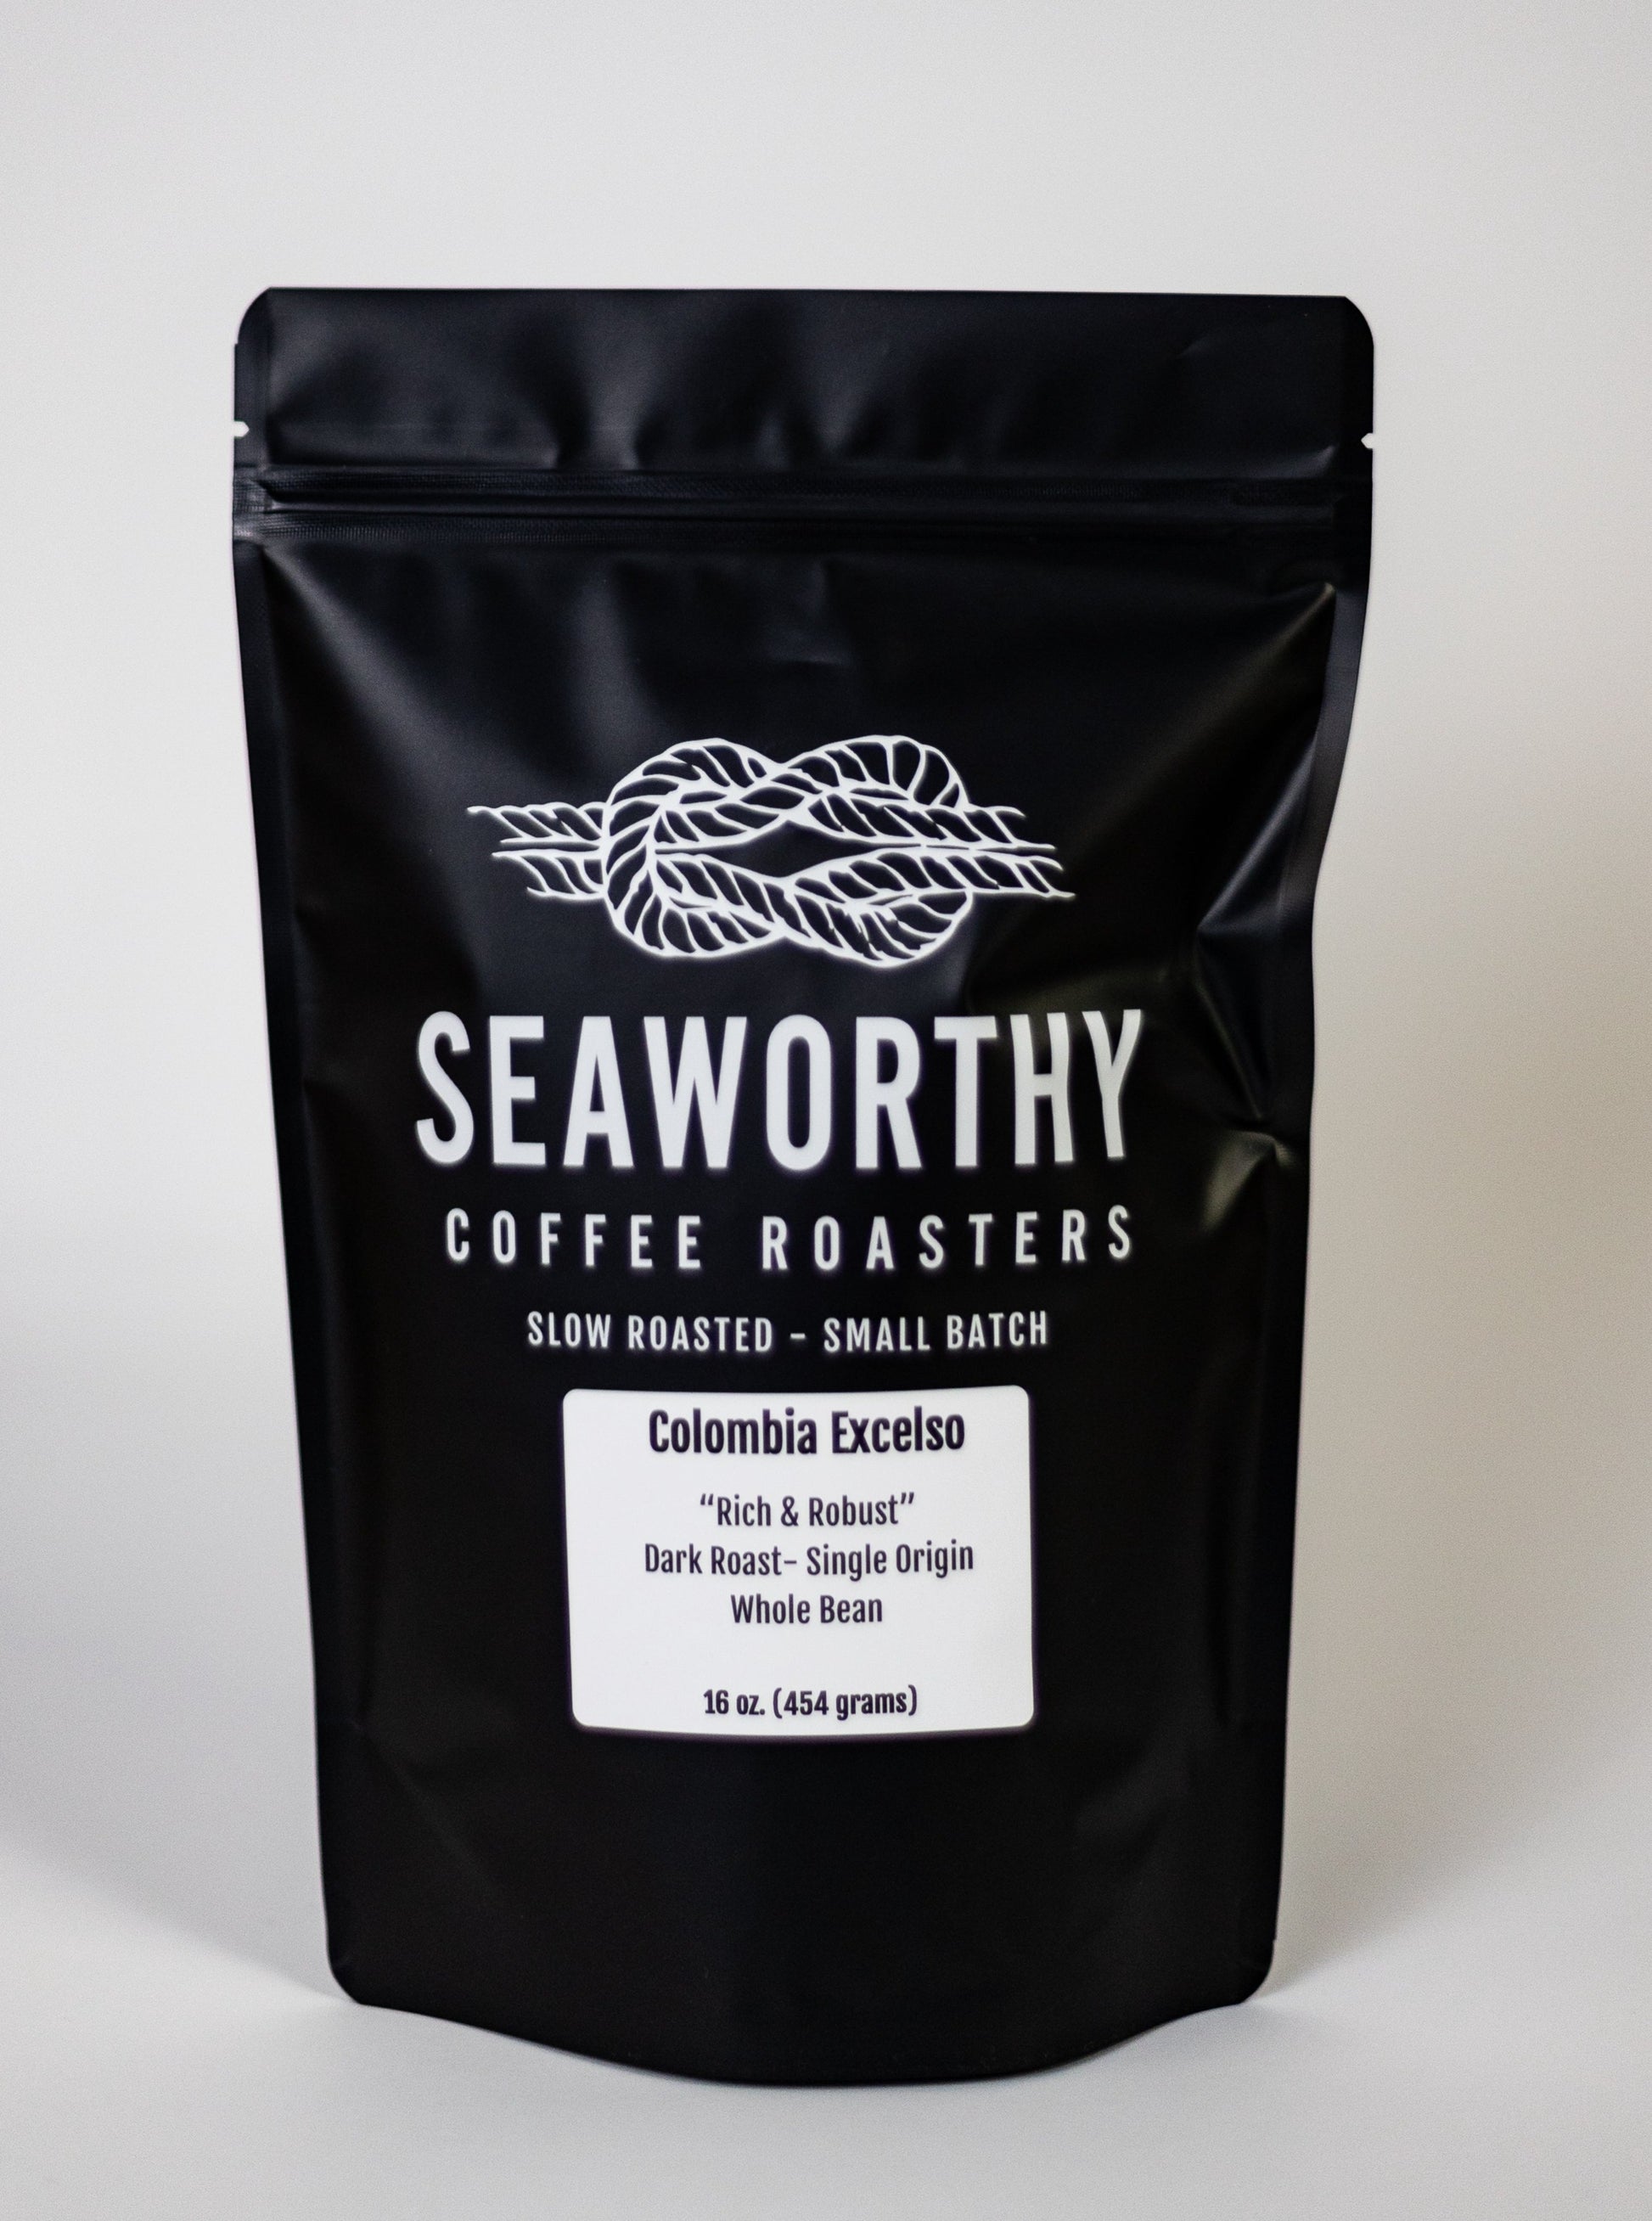 Seaworthy slow roasted, small batch, low acid coffee. 1 pound bag of Colombia dark roast specialty coffee.